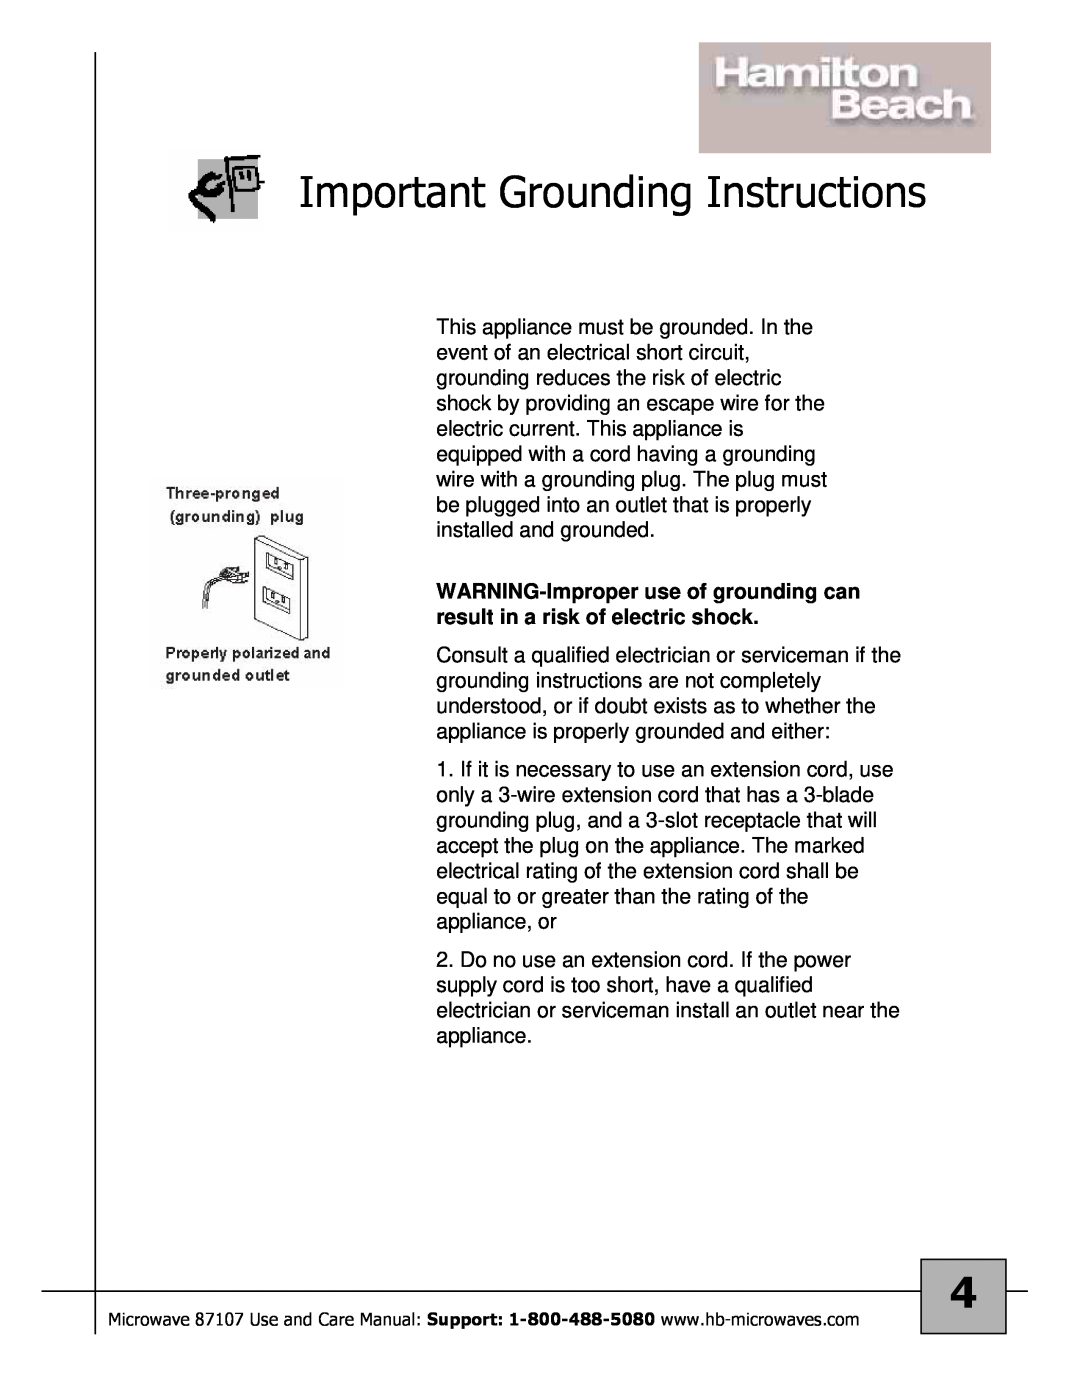 Hamilton Beach 87107 owner manual Important Grounding Instructions 